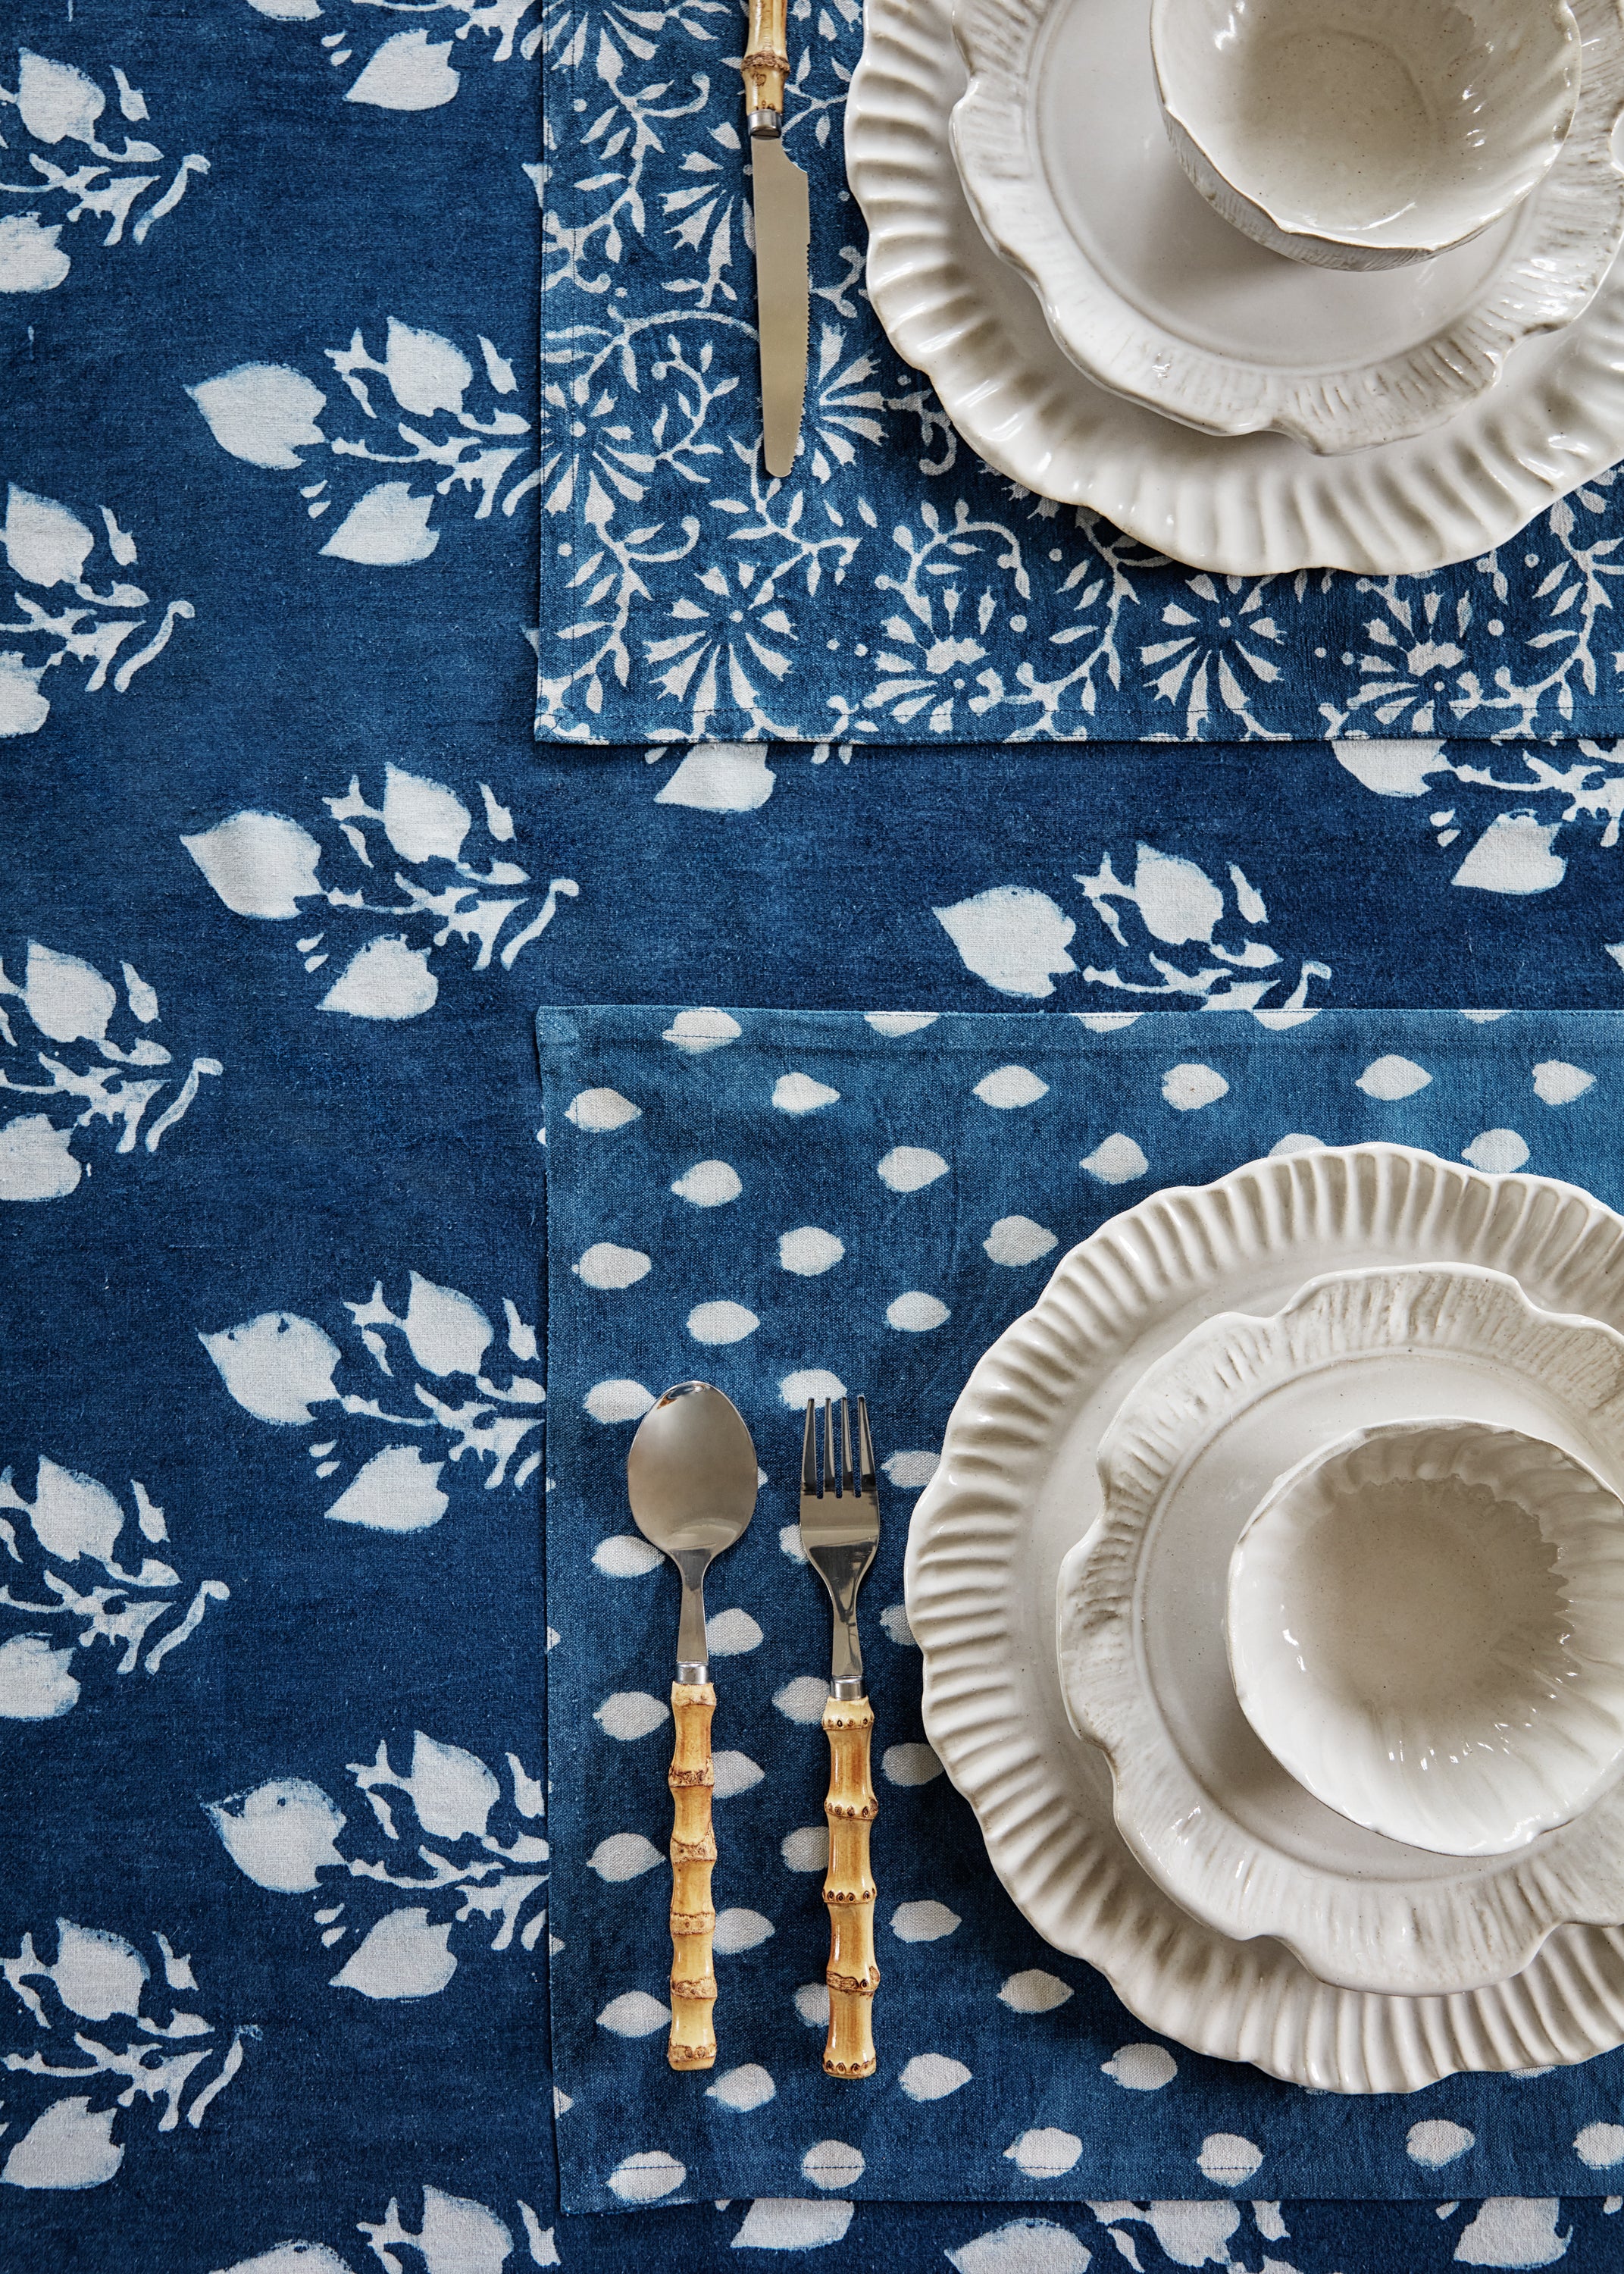 Tablecloth with Leaf print in Indigo